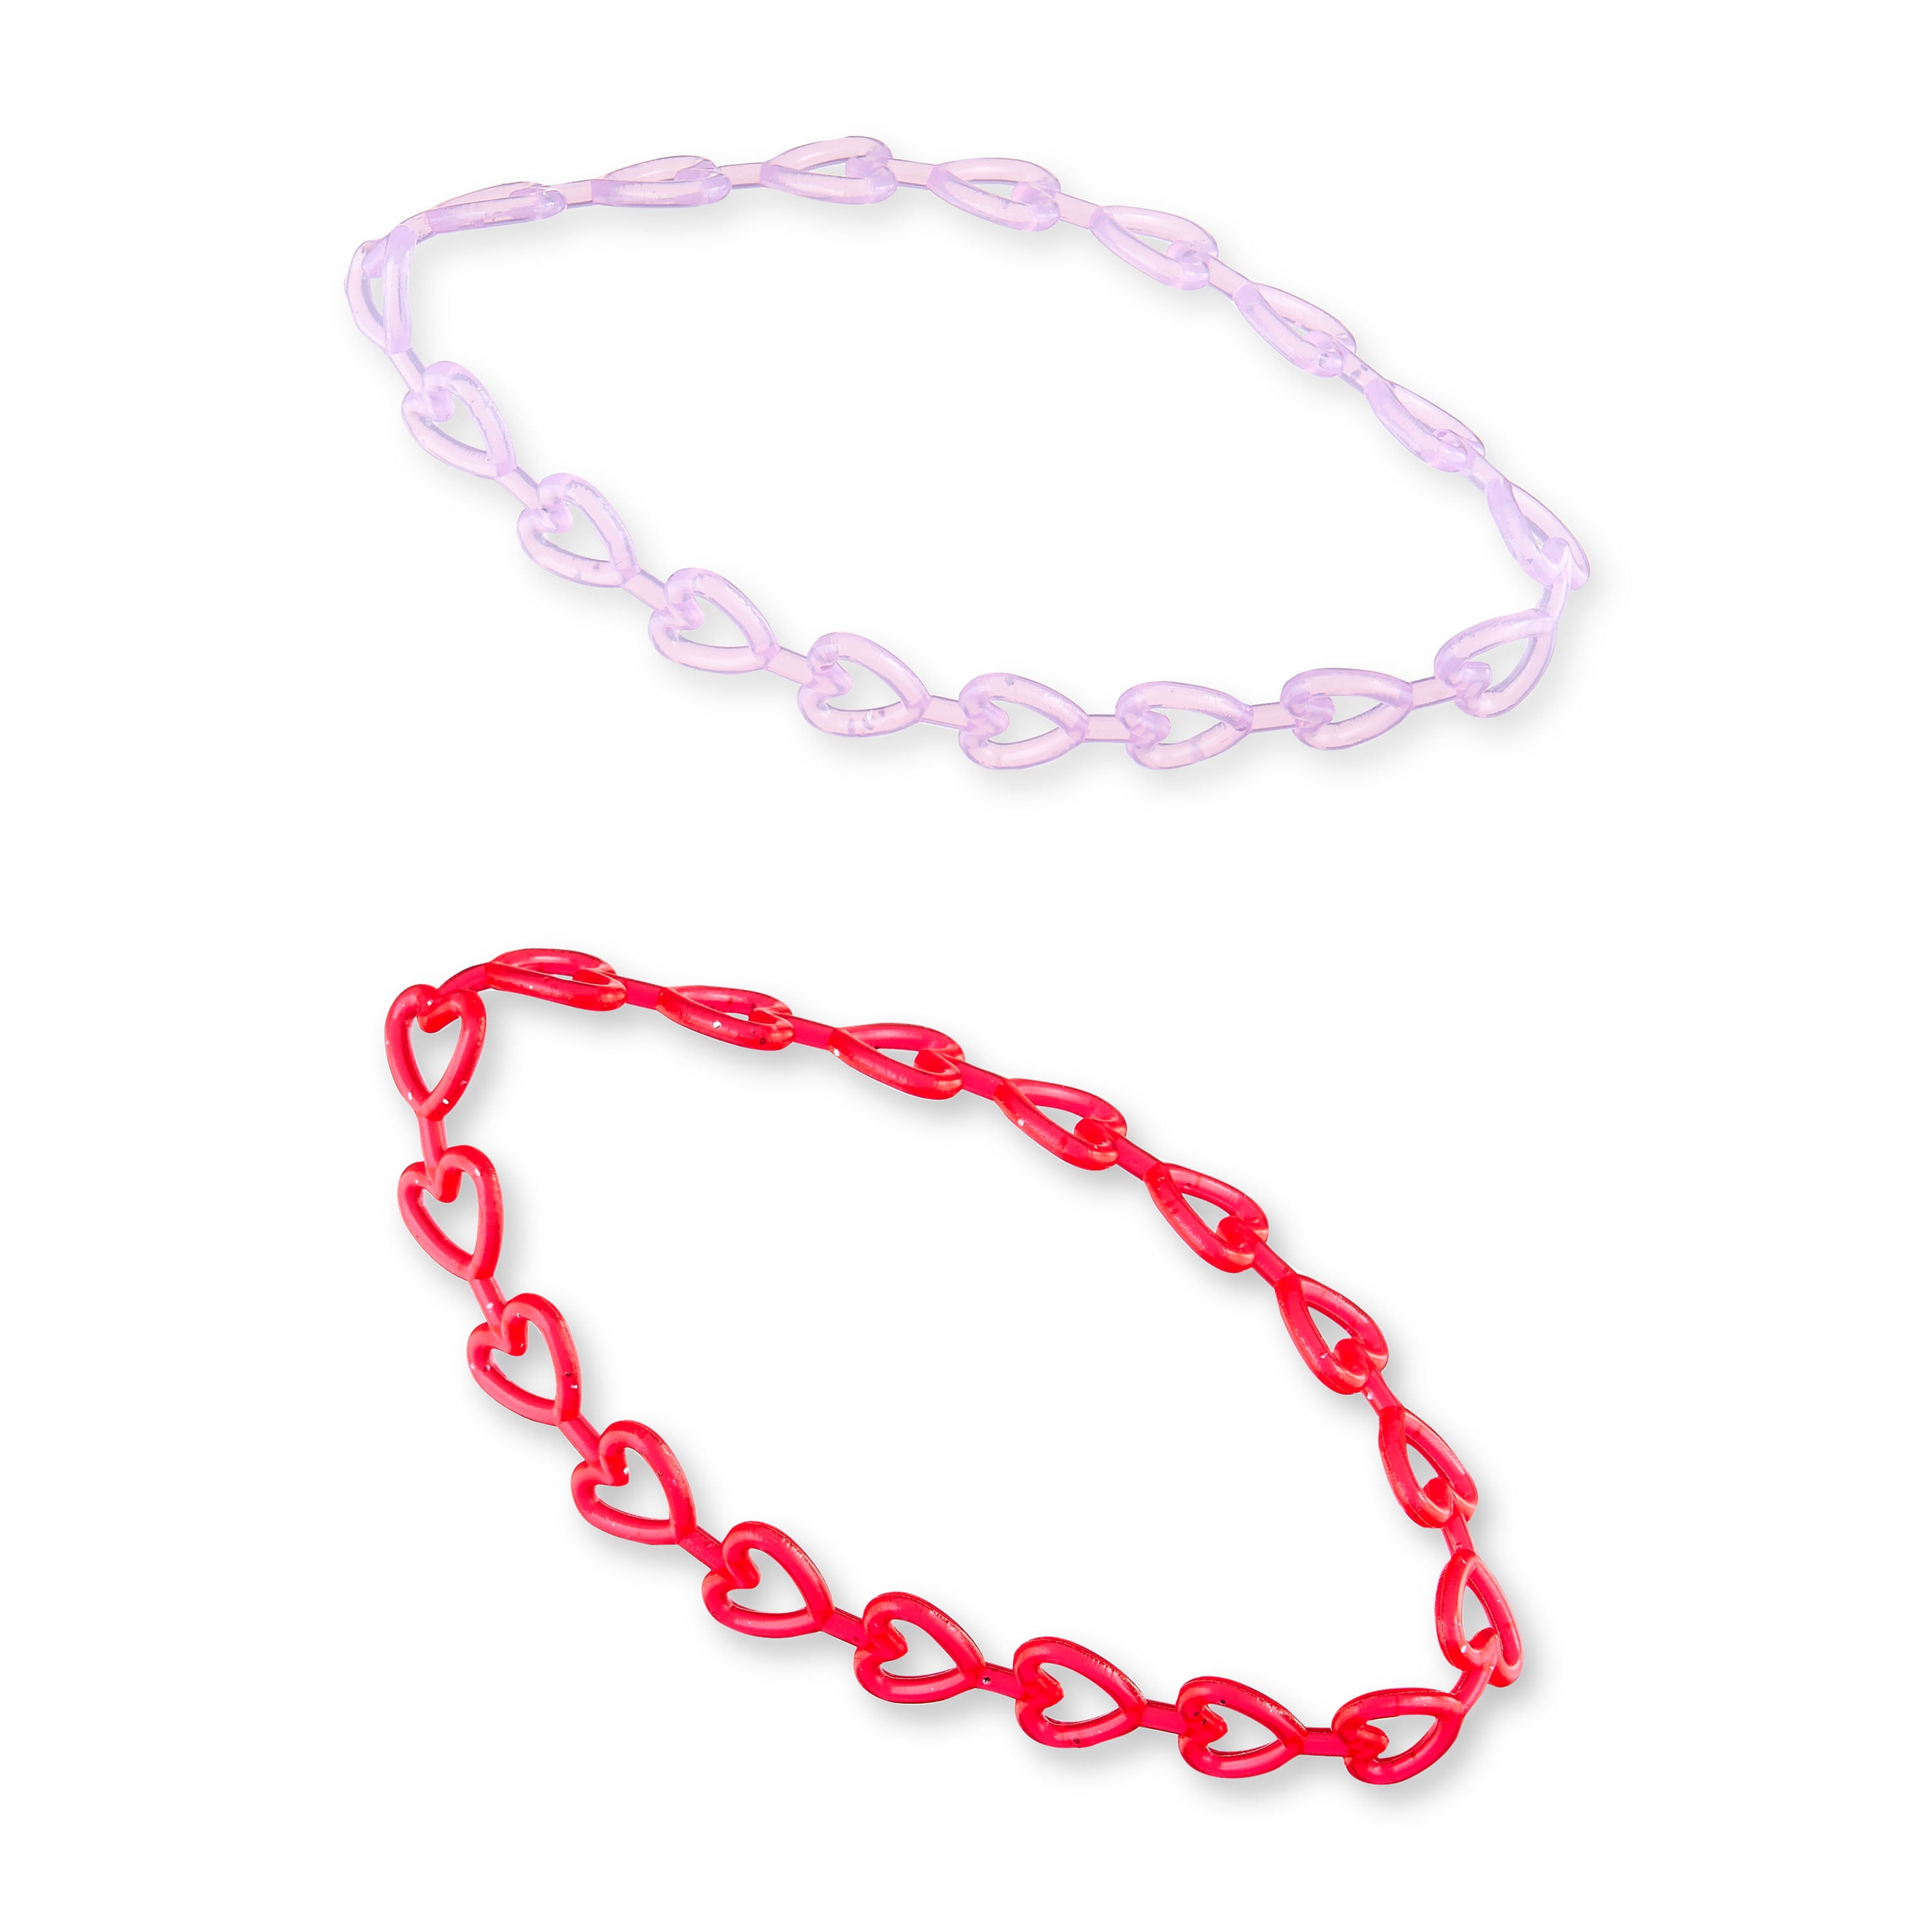 WAY TO CELEBRATE! Way To Celebrate Valentine's Day Glitter Heart Bracelets, 6 Count